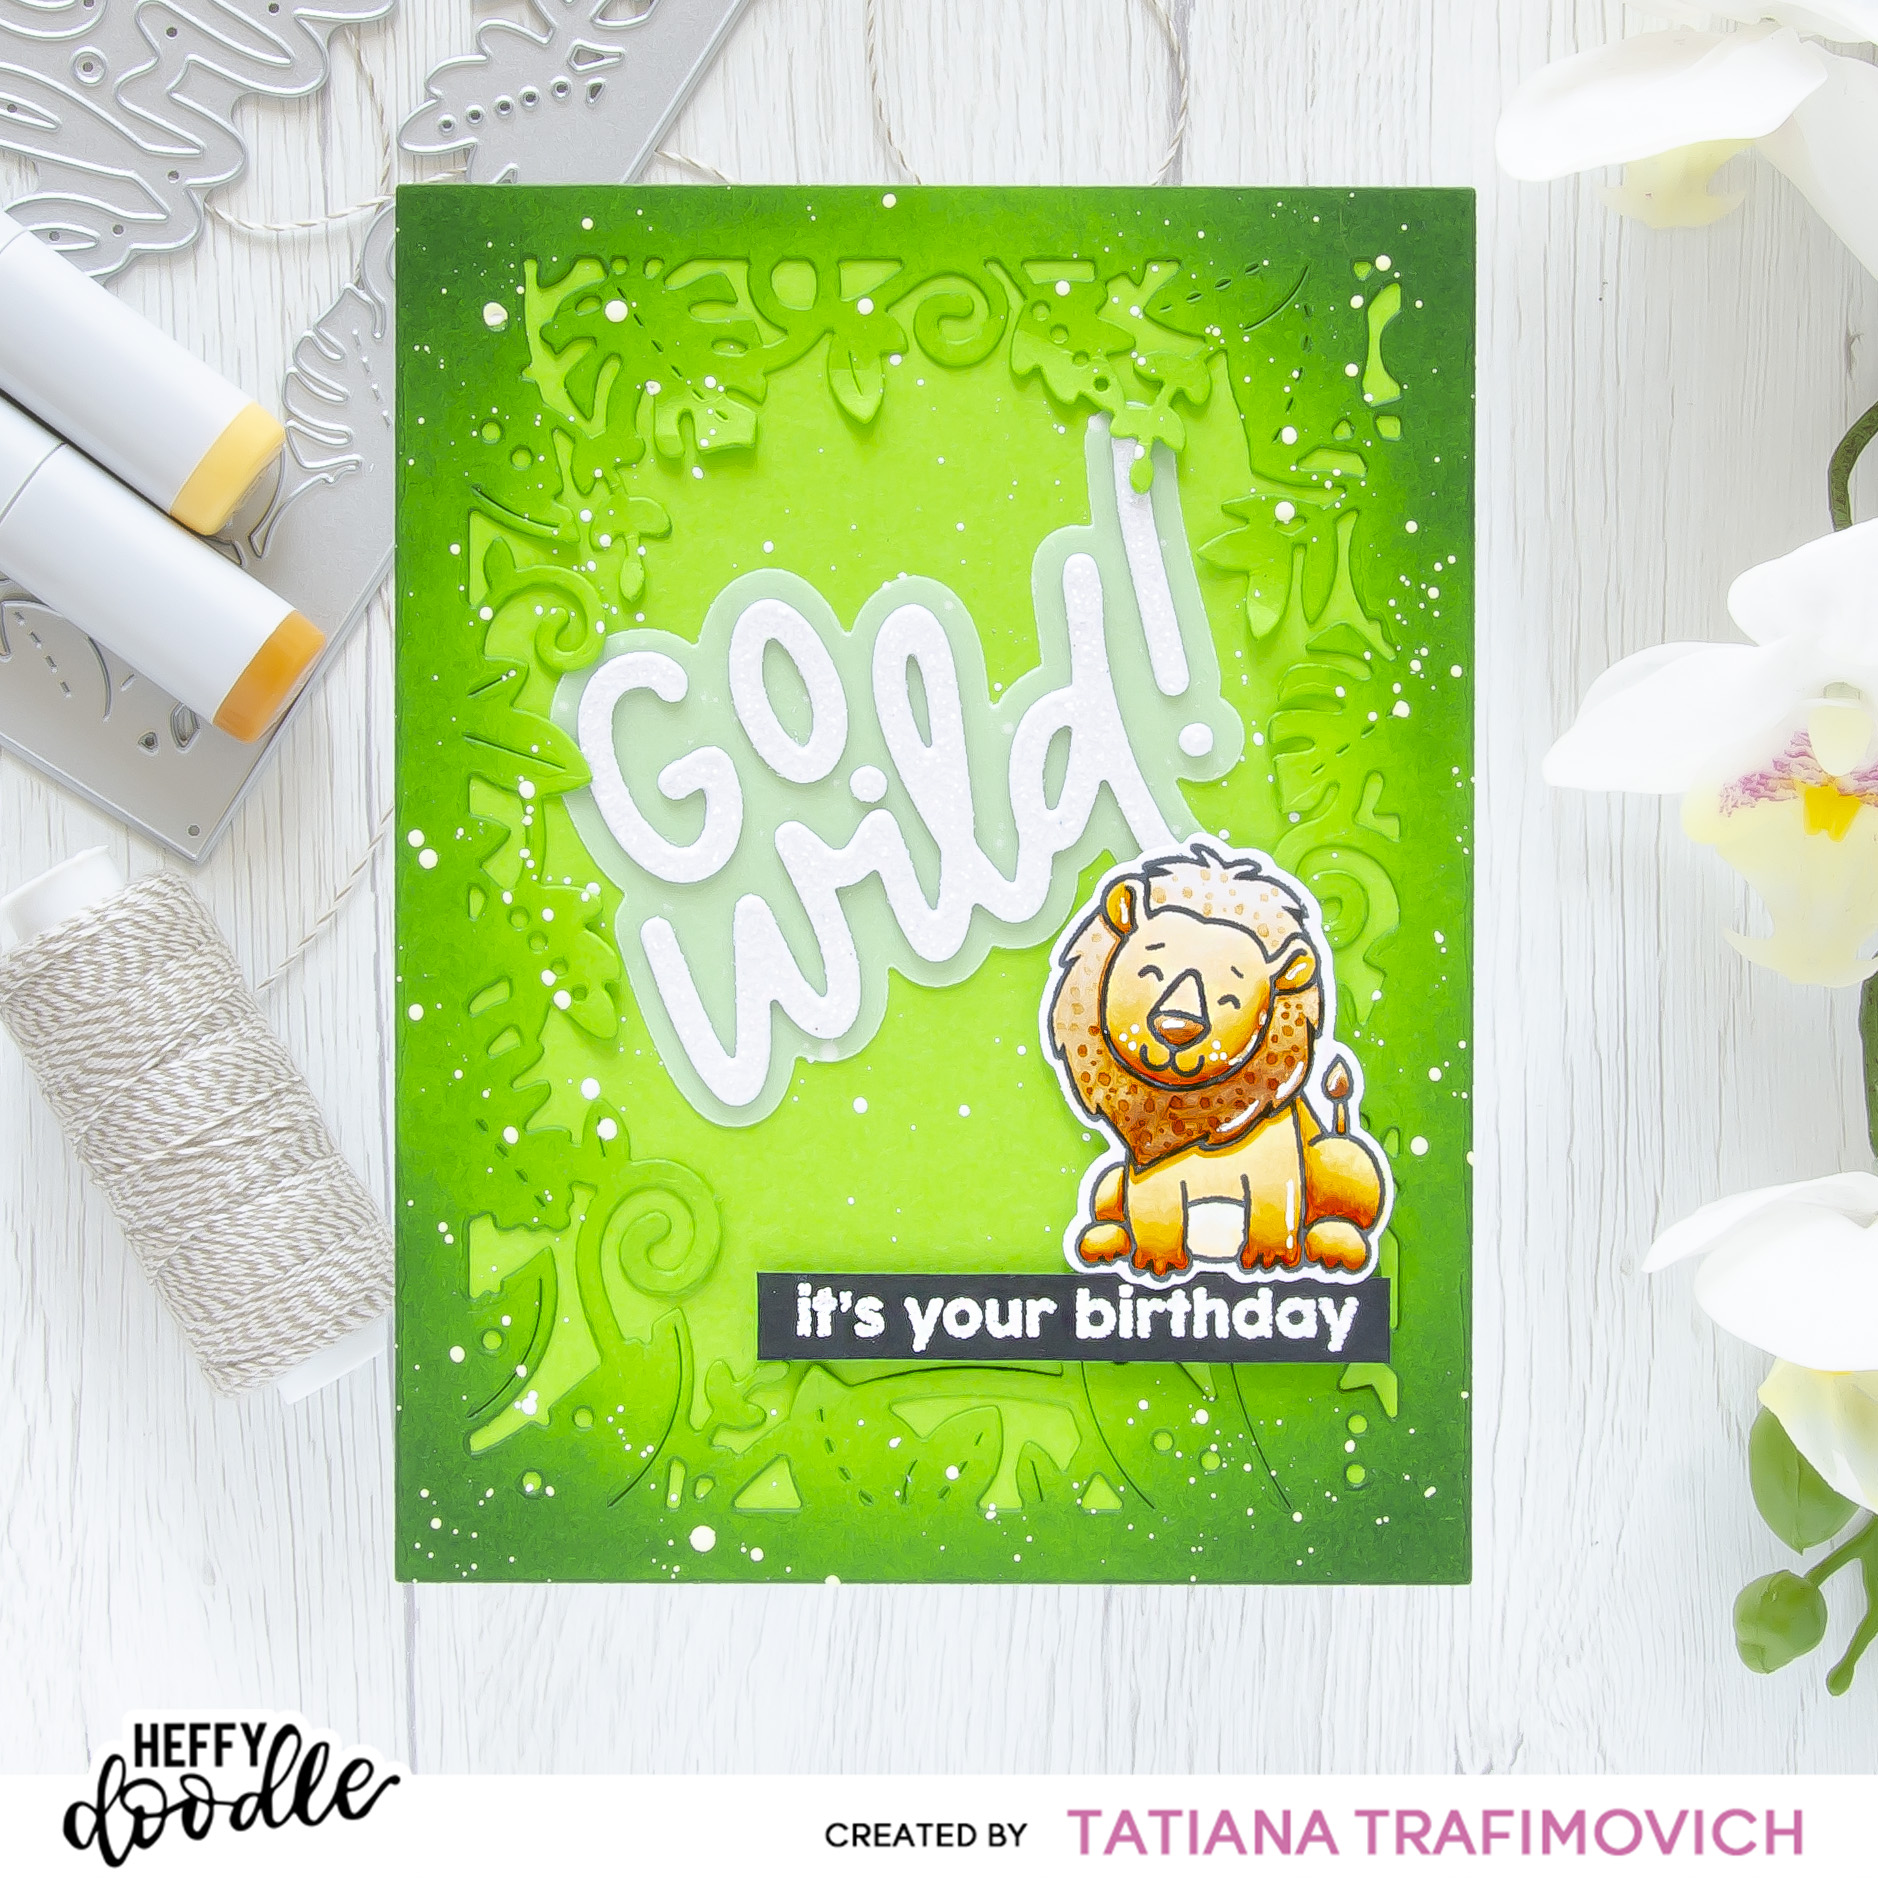 It's Your Birthday! Go Wild!  #handmade card by Tatiana Trafimovich #tatianacraftandart - stamps and dies by Heffy Doodle #heffydoodle